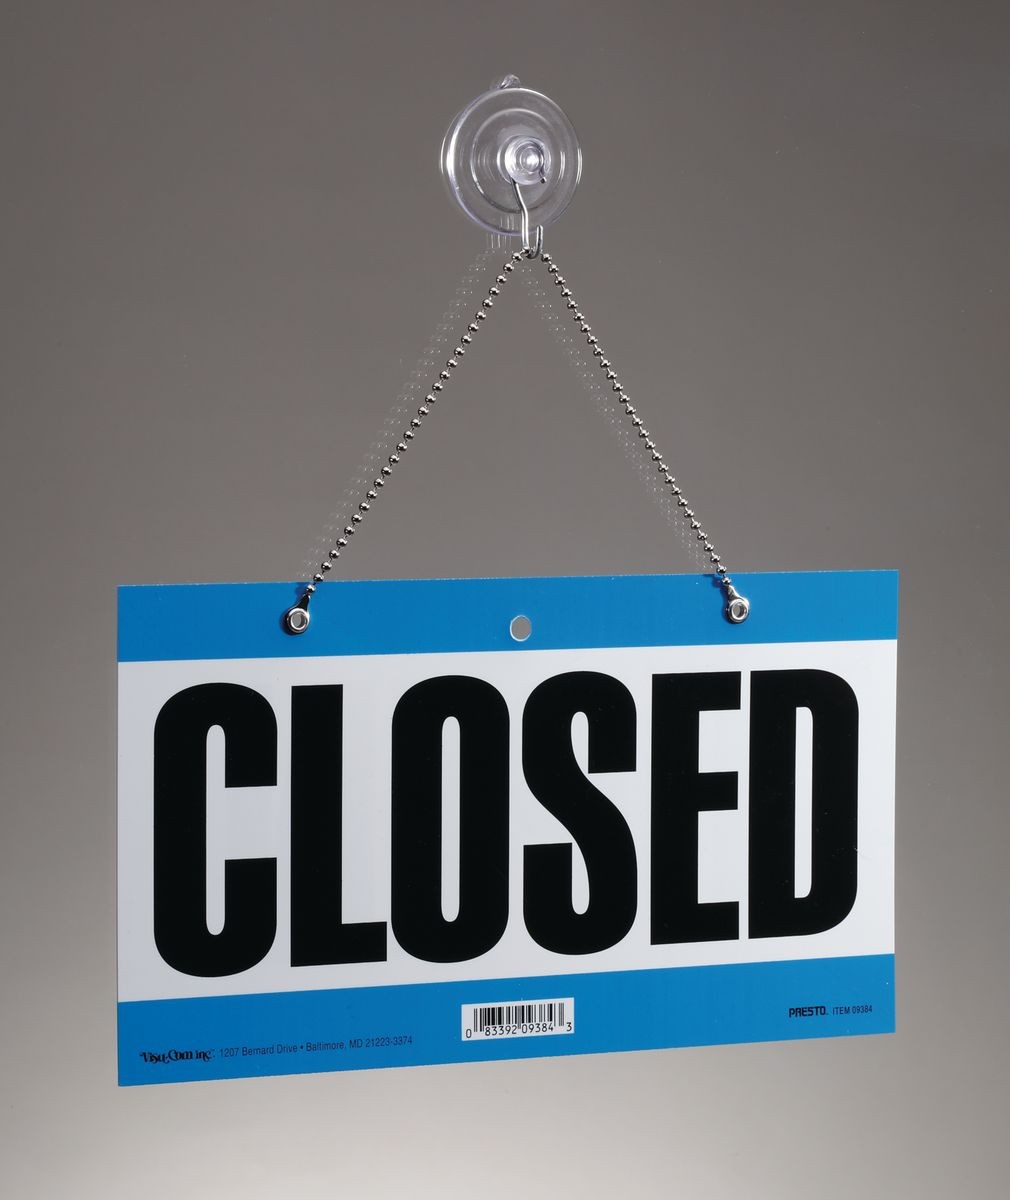 Closed_Sign